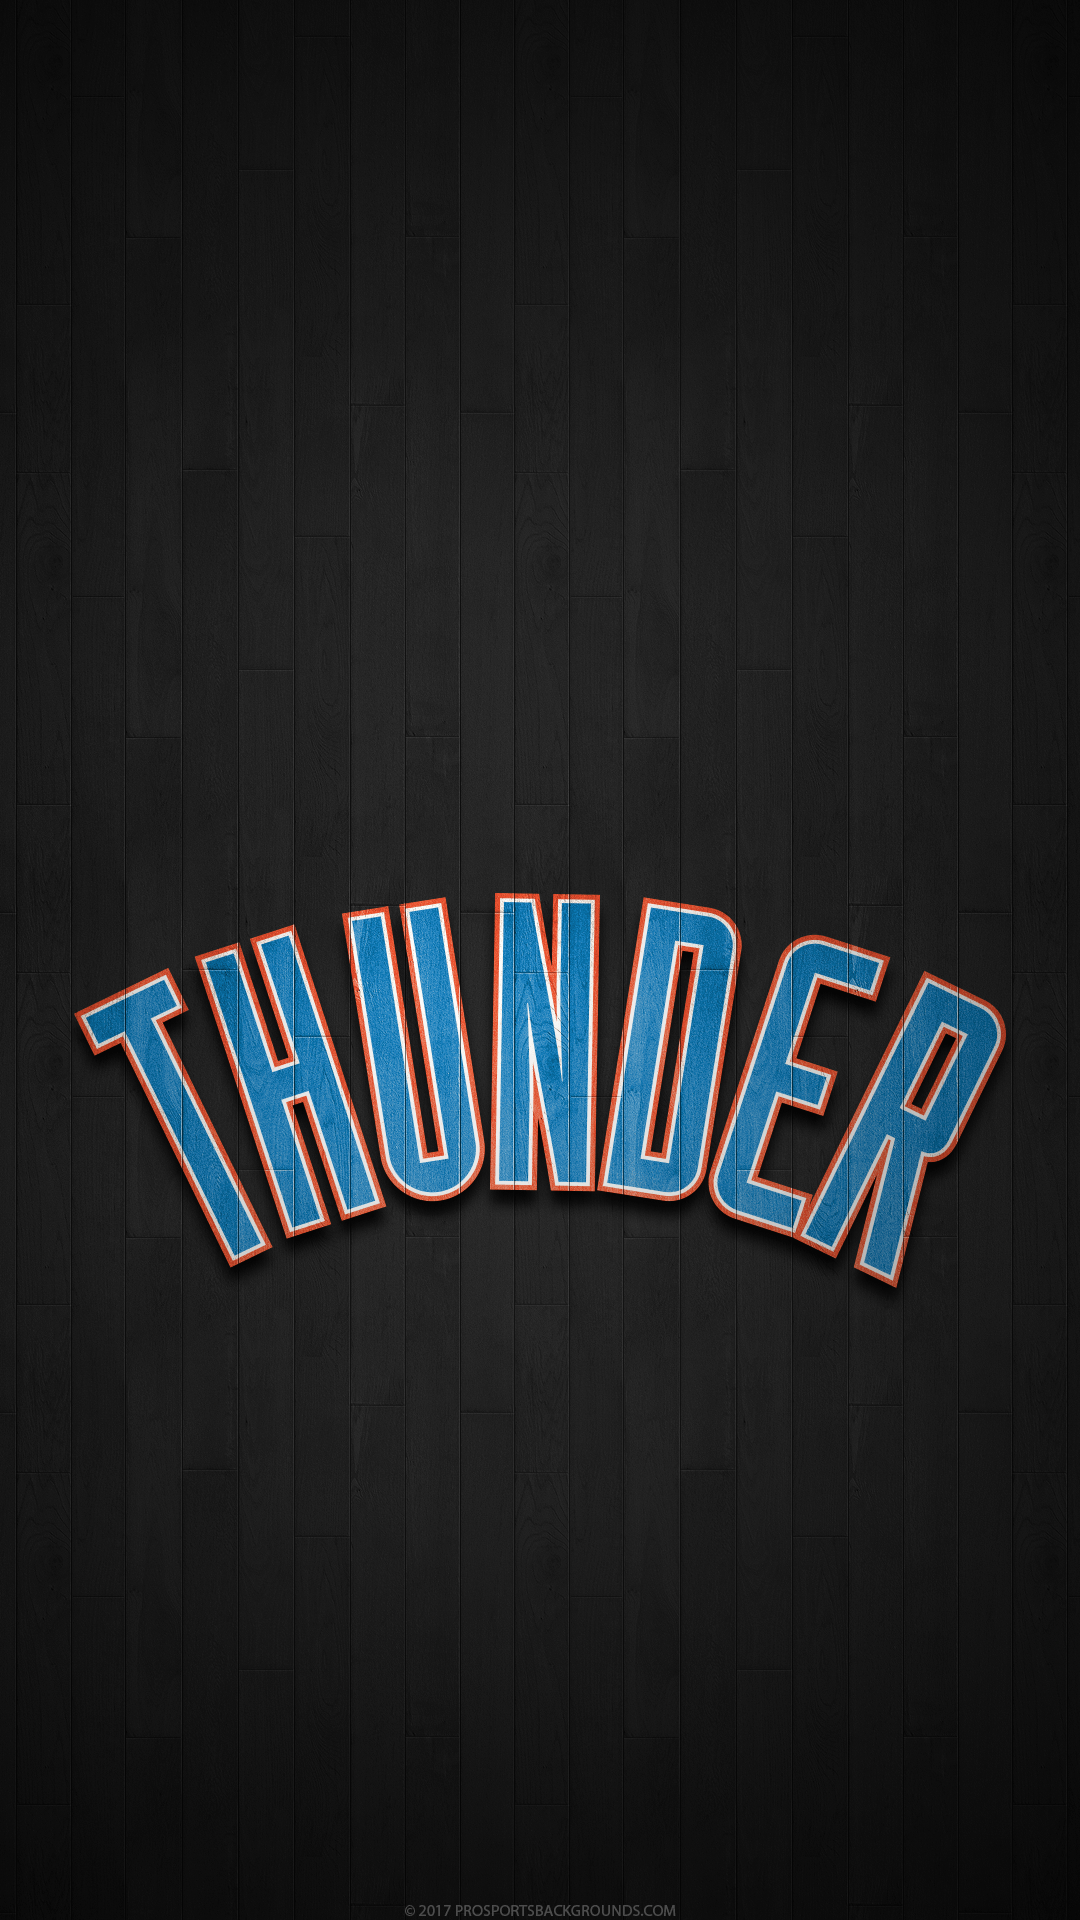 Oklahoma City Thunder Wallpaper. iPhone. Android